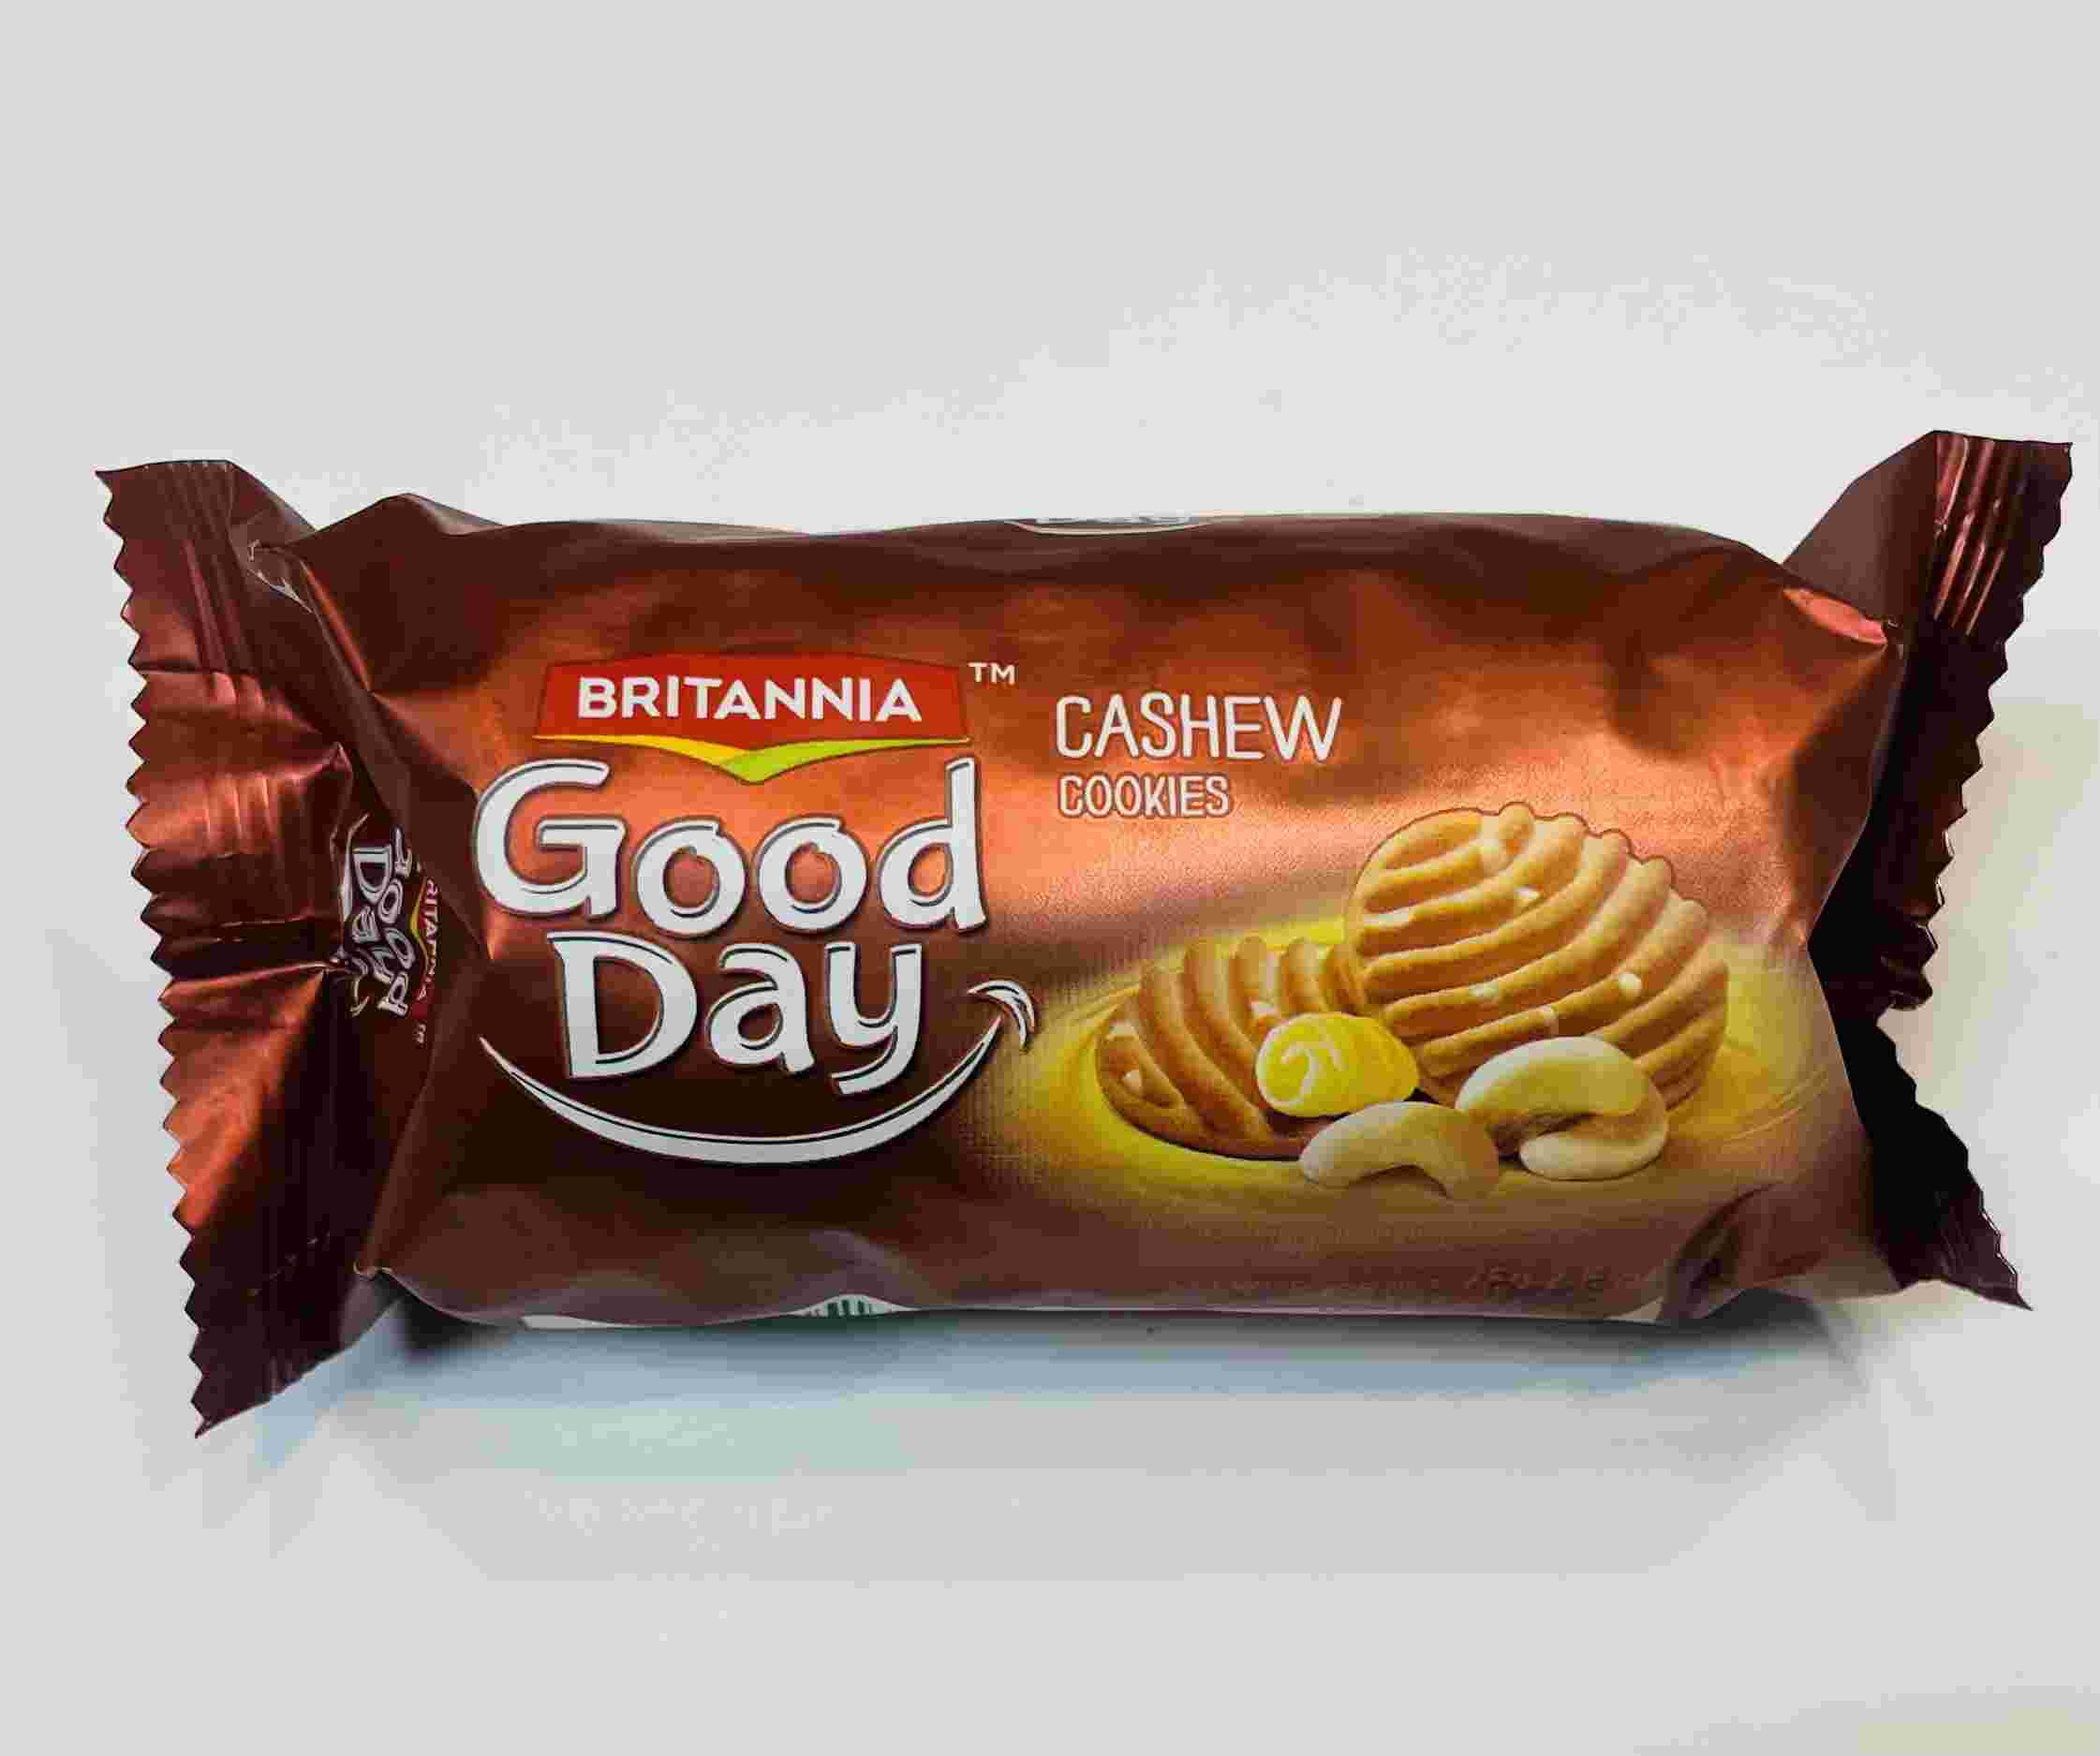 Britannia Good Day Cashew